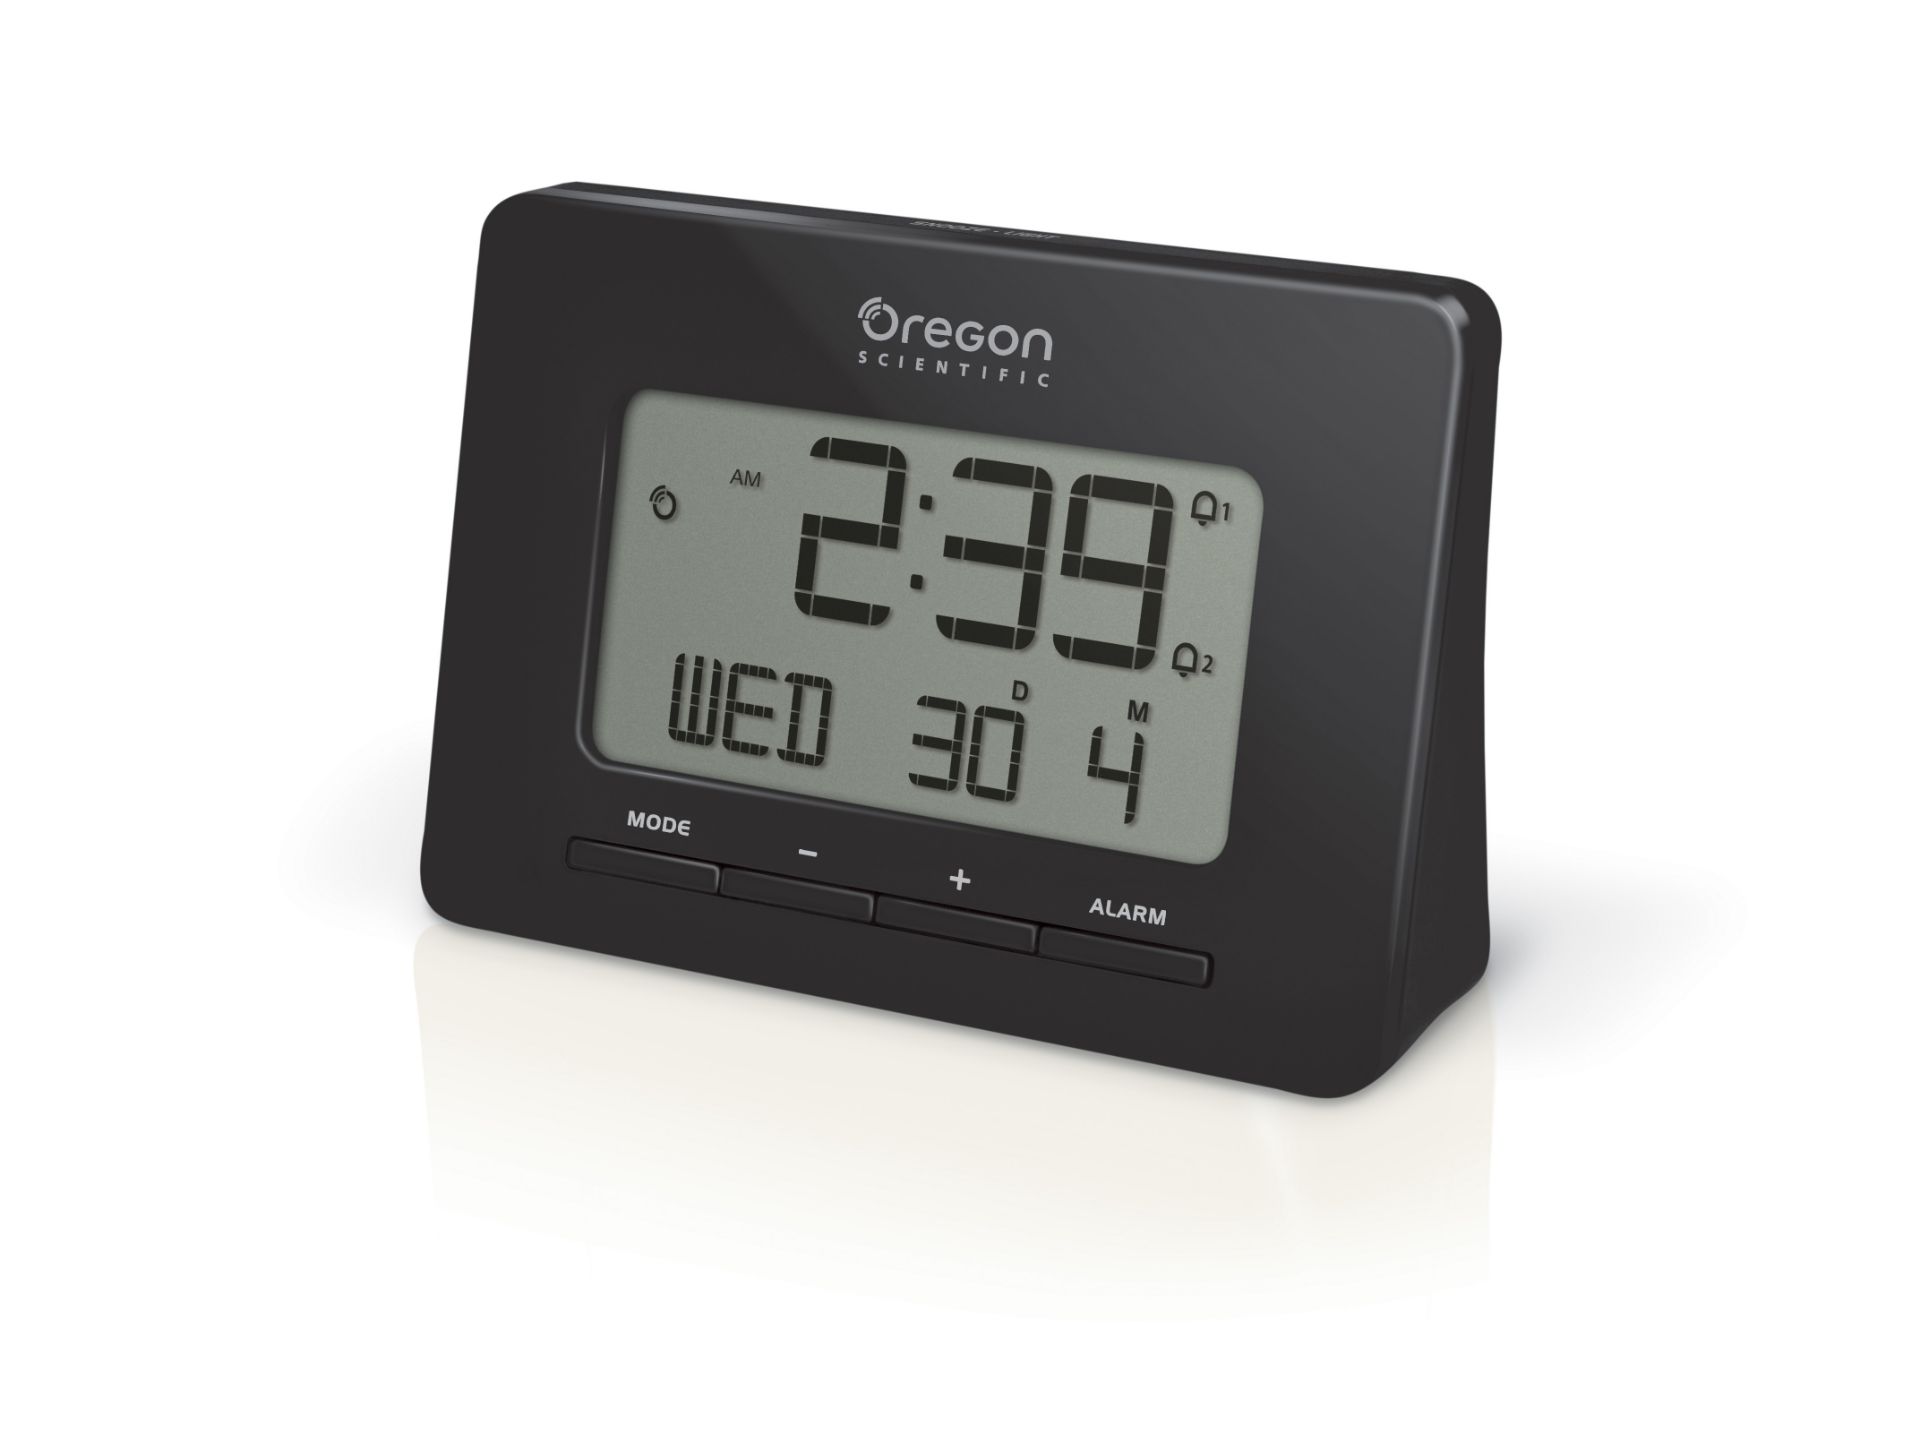 Oregon Scientific radio-controlled alarm with Dual Alarm Function RRP £30.00